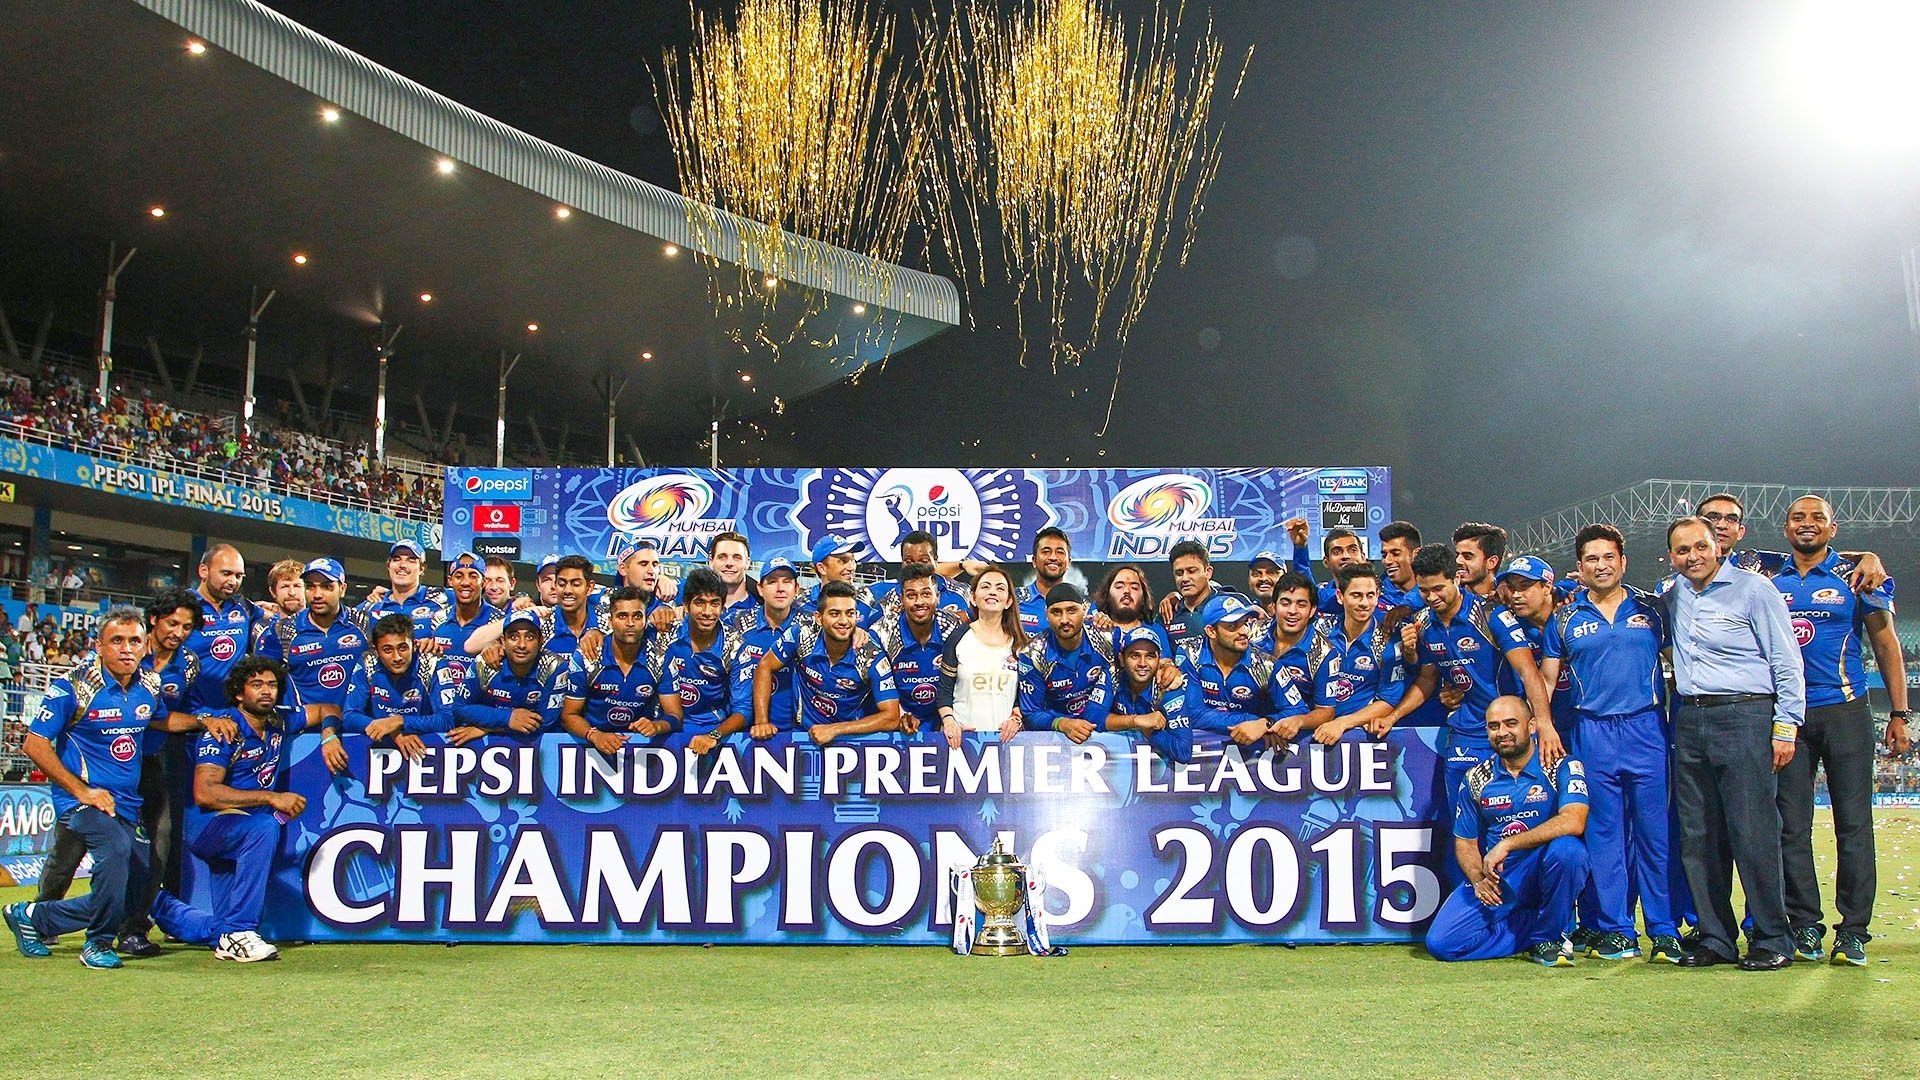 Highlights of IPL 2015: A tale of an extraordinary comeback - Mumbai Indians